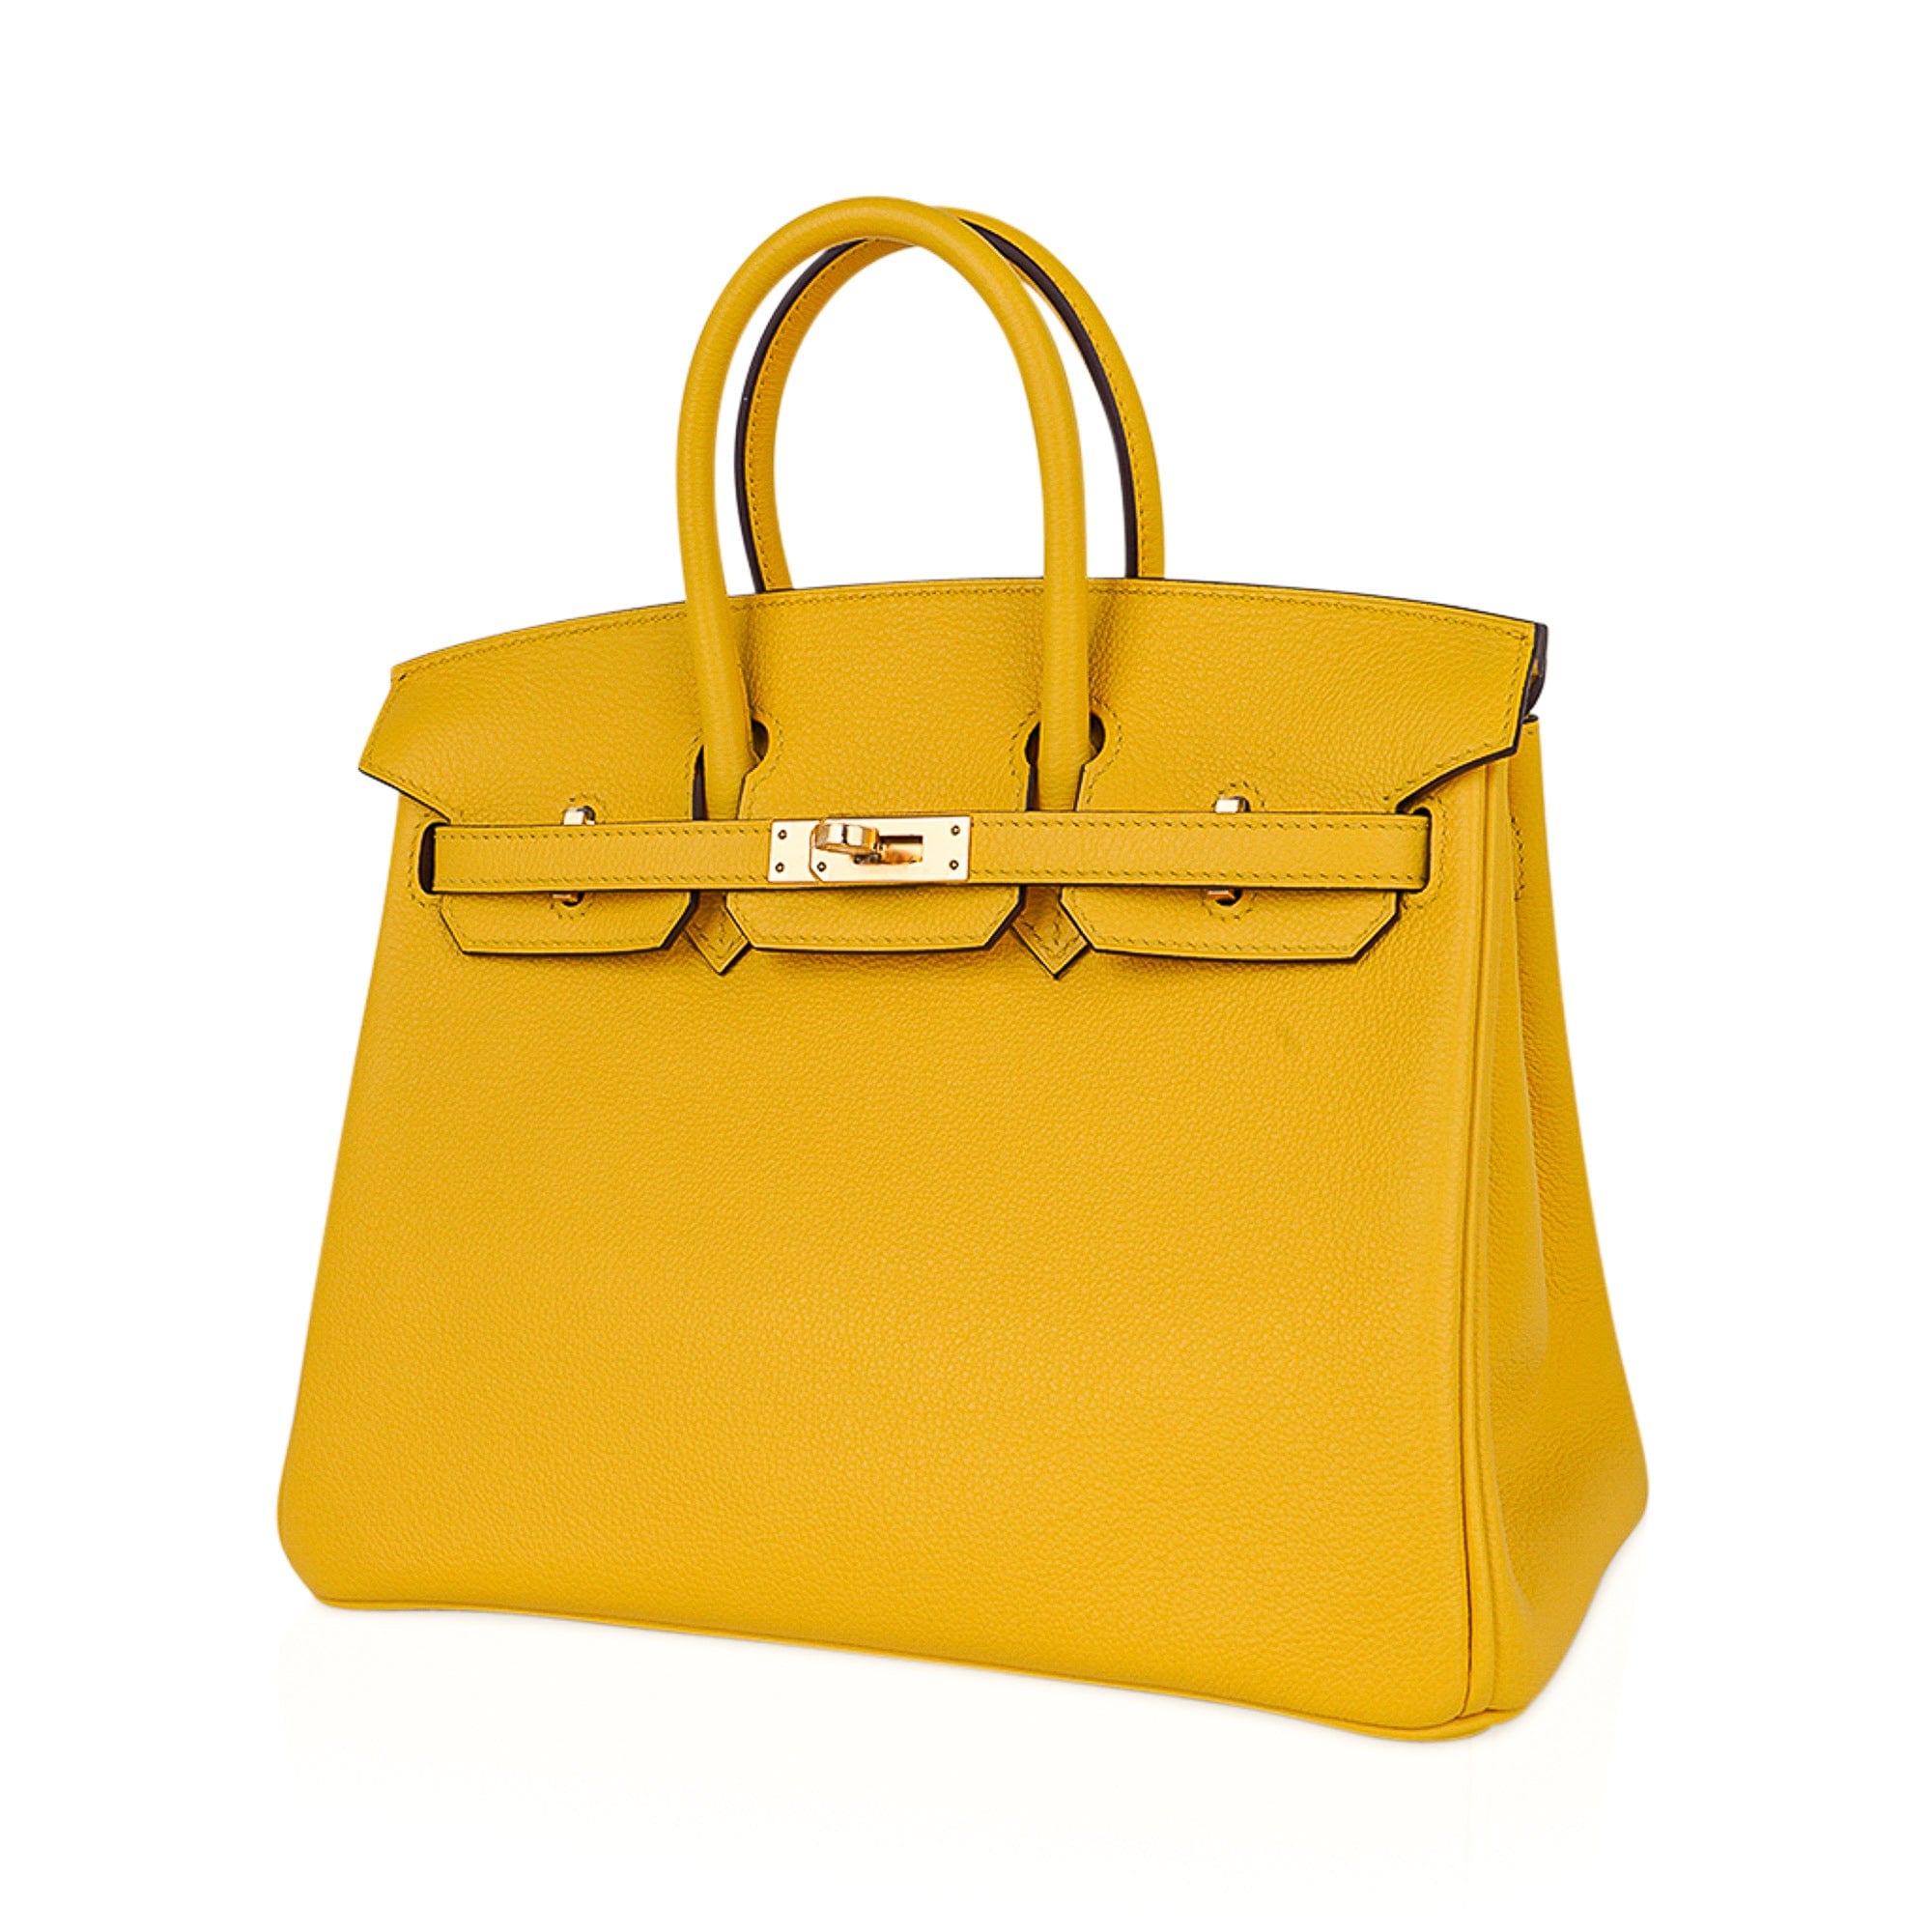 HERMÈS Kelly 25 handbag in Jaune de Naples Swift leather with